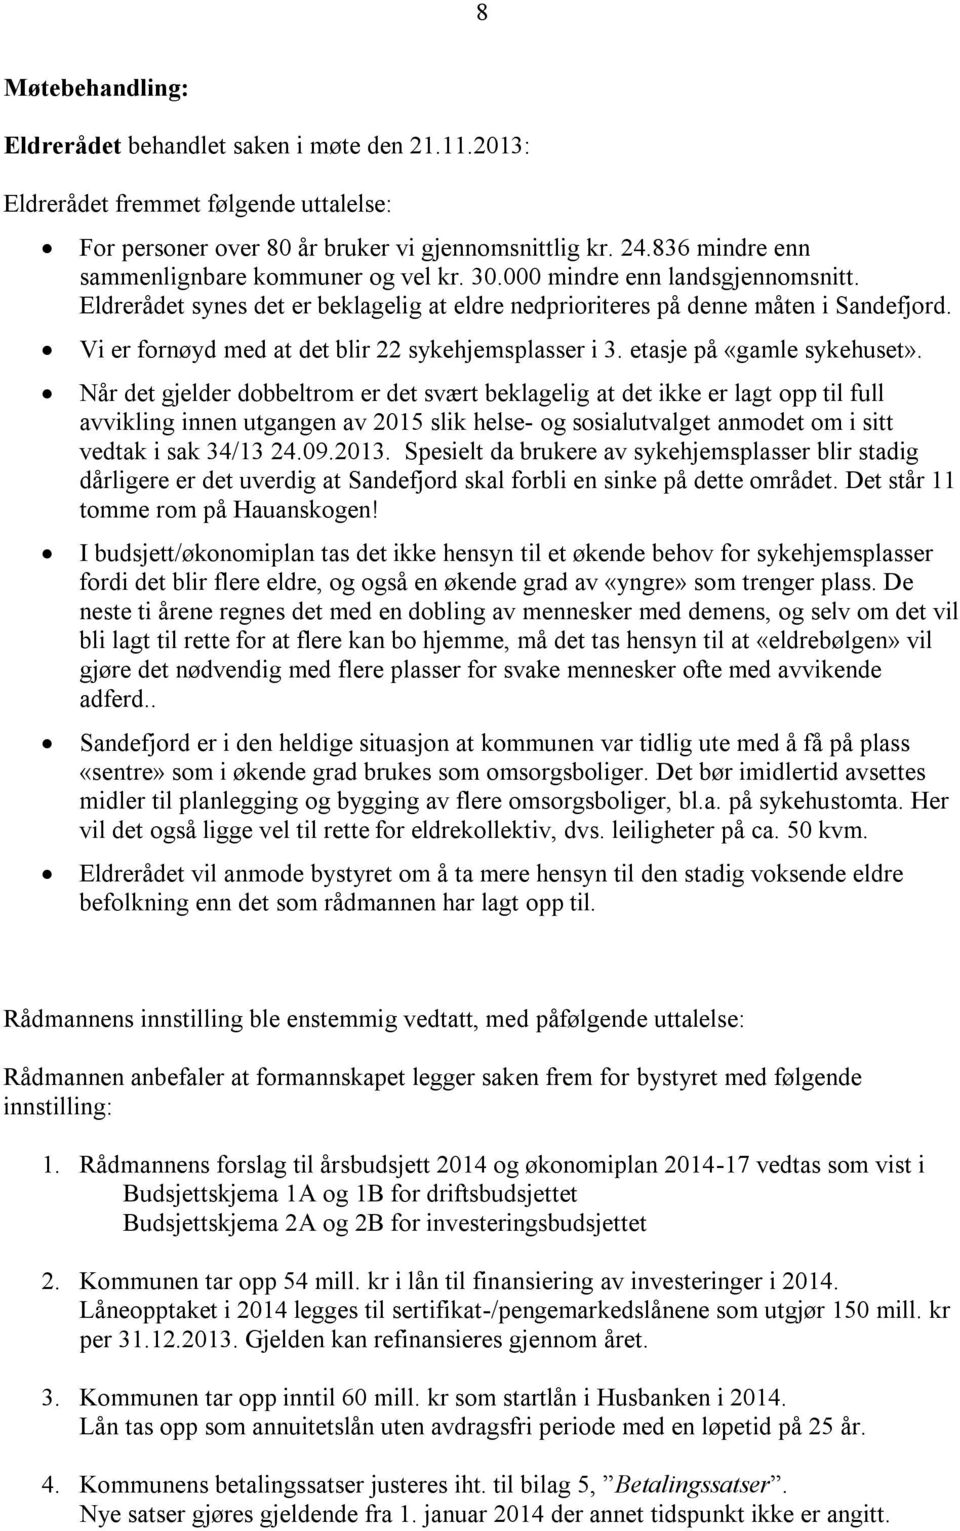 BUDSJETT ØKONOMIPLAN (vedtatt av bystyret 19. des. 2013) - PDF Free Download